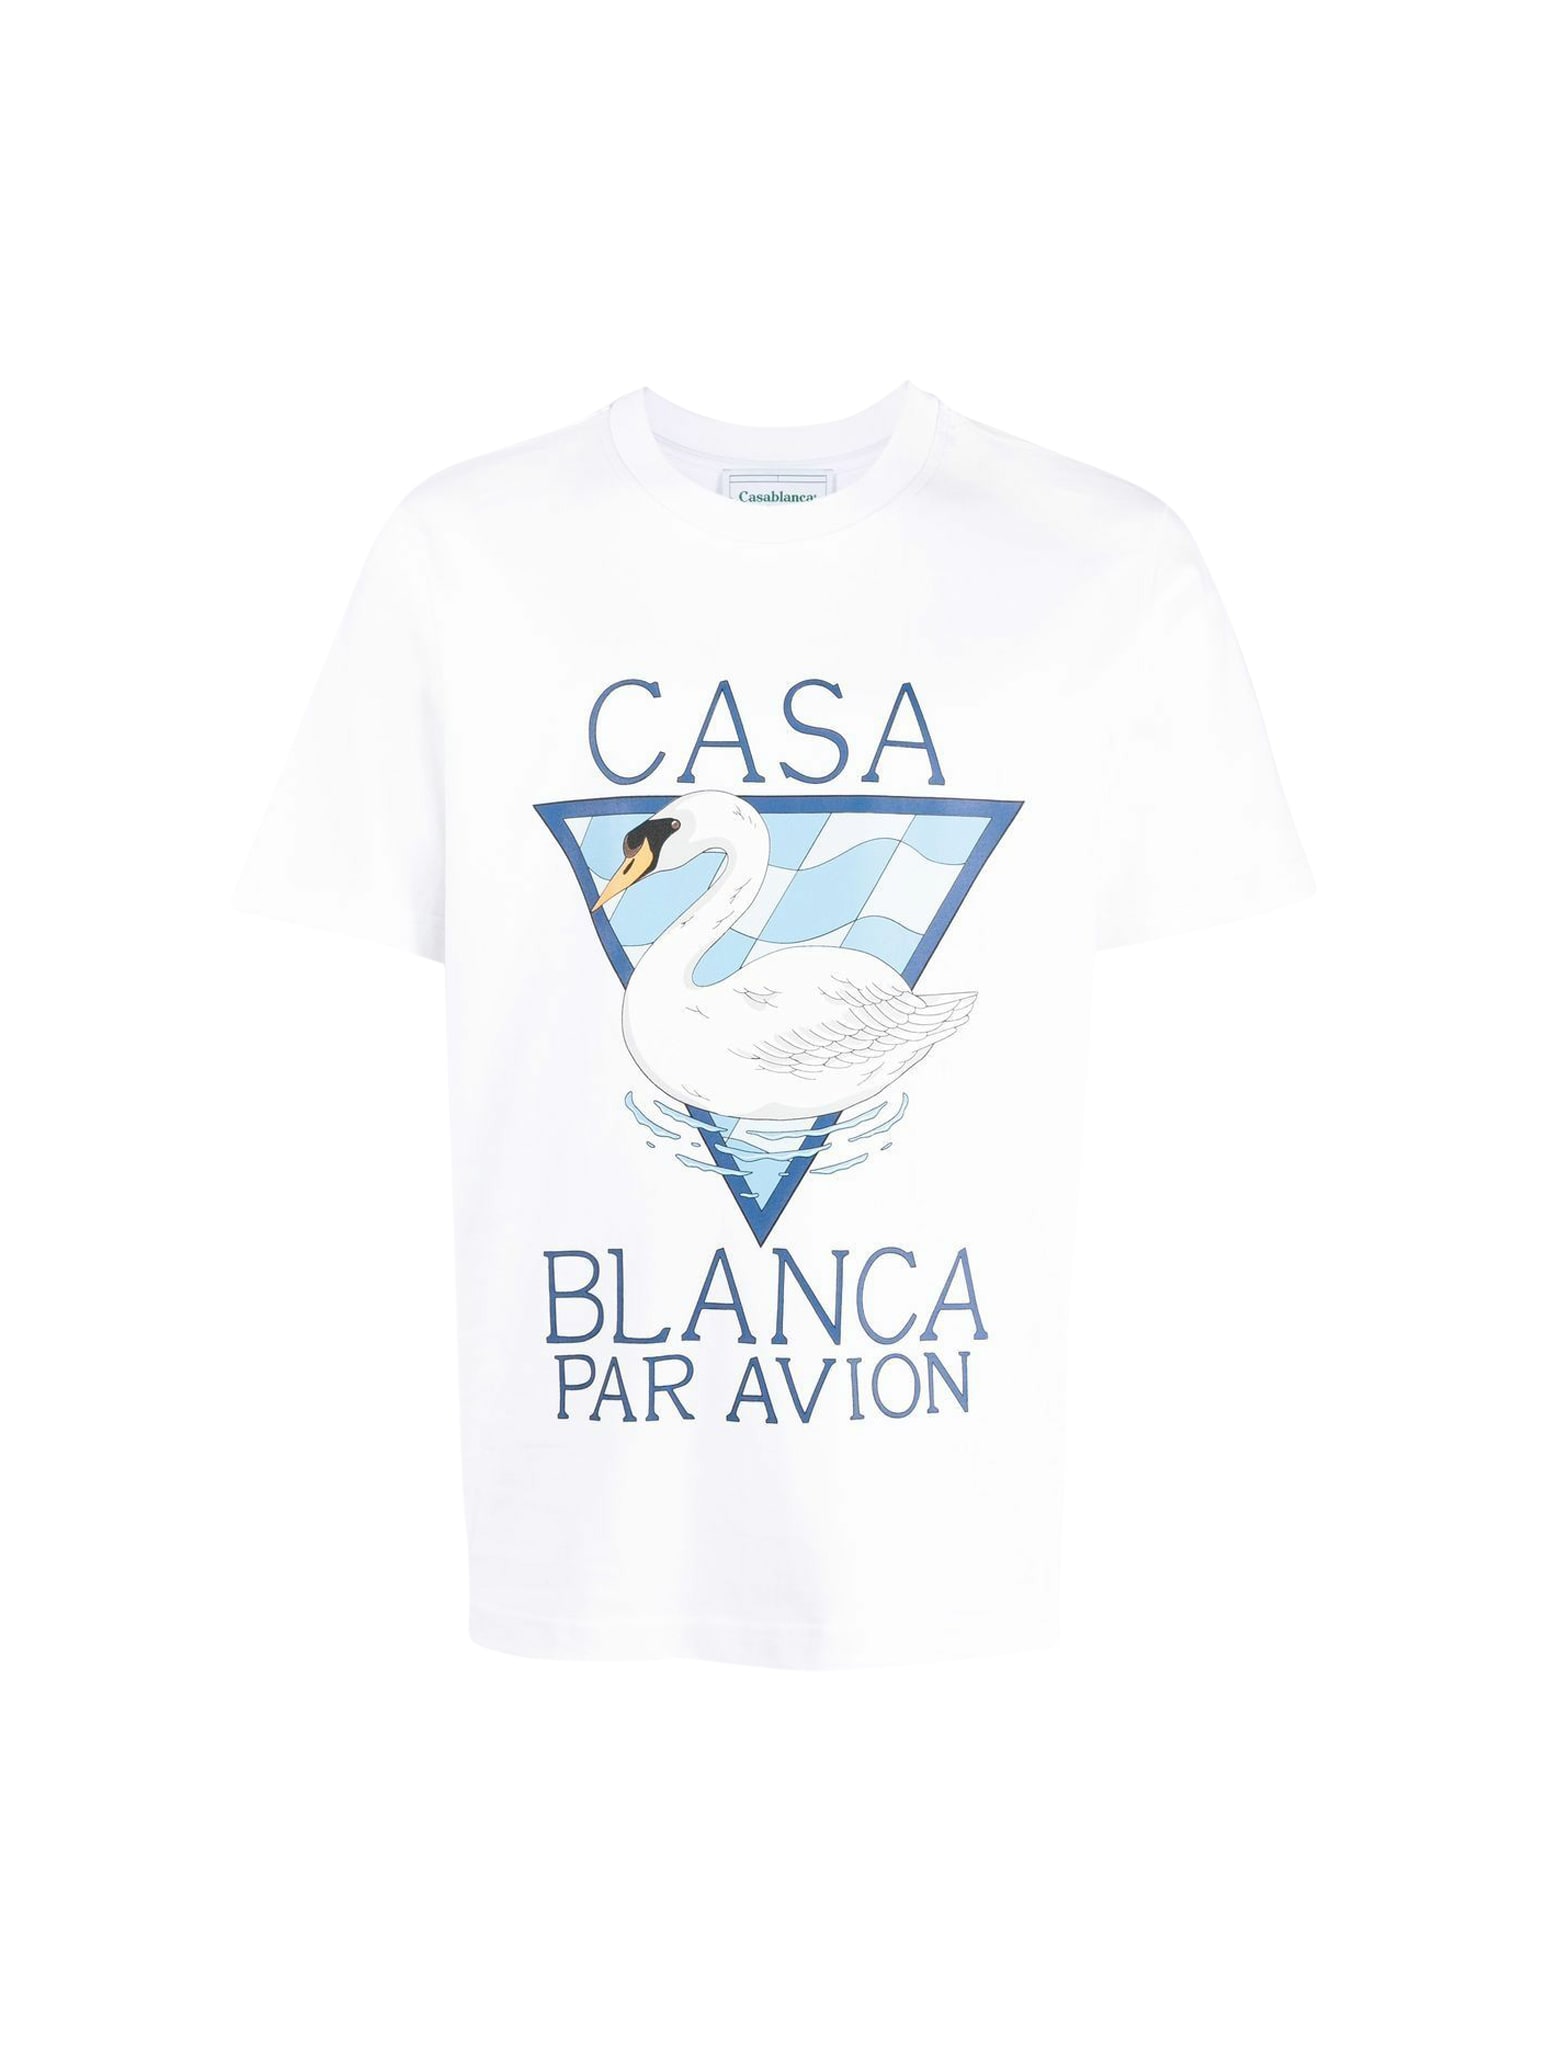 Casablanca Par Avion Screen Printed T-shirt